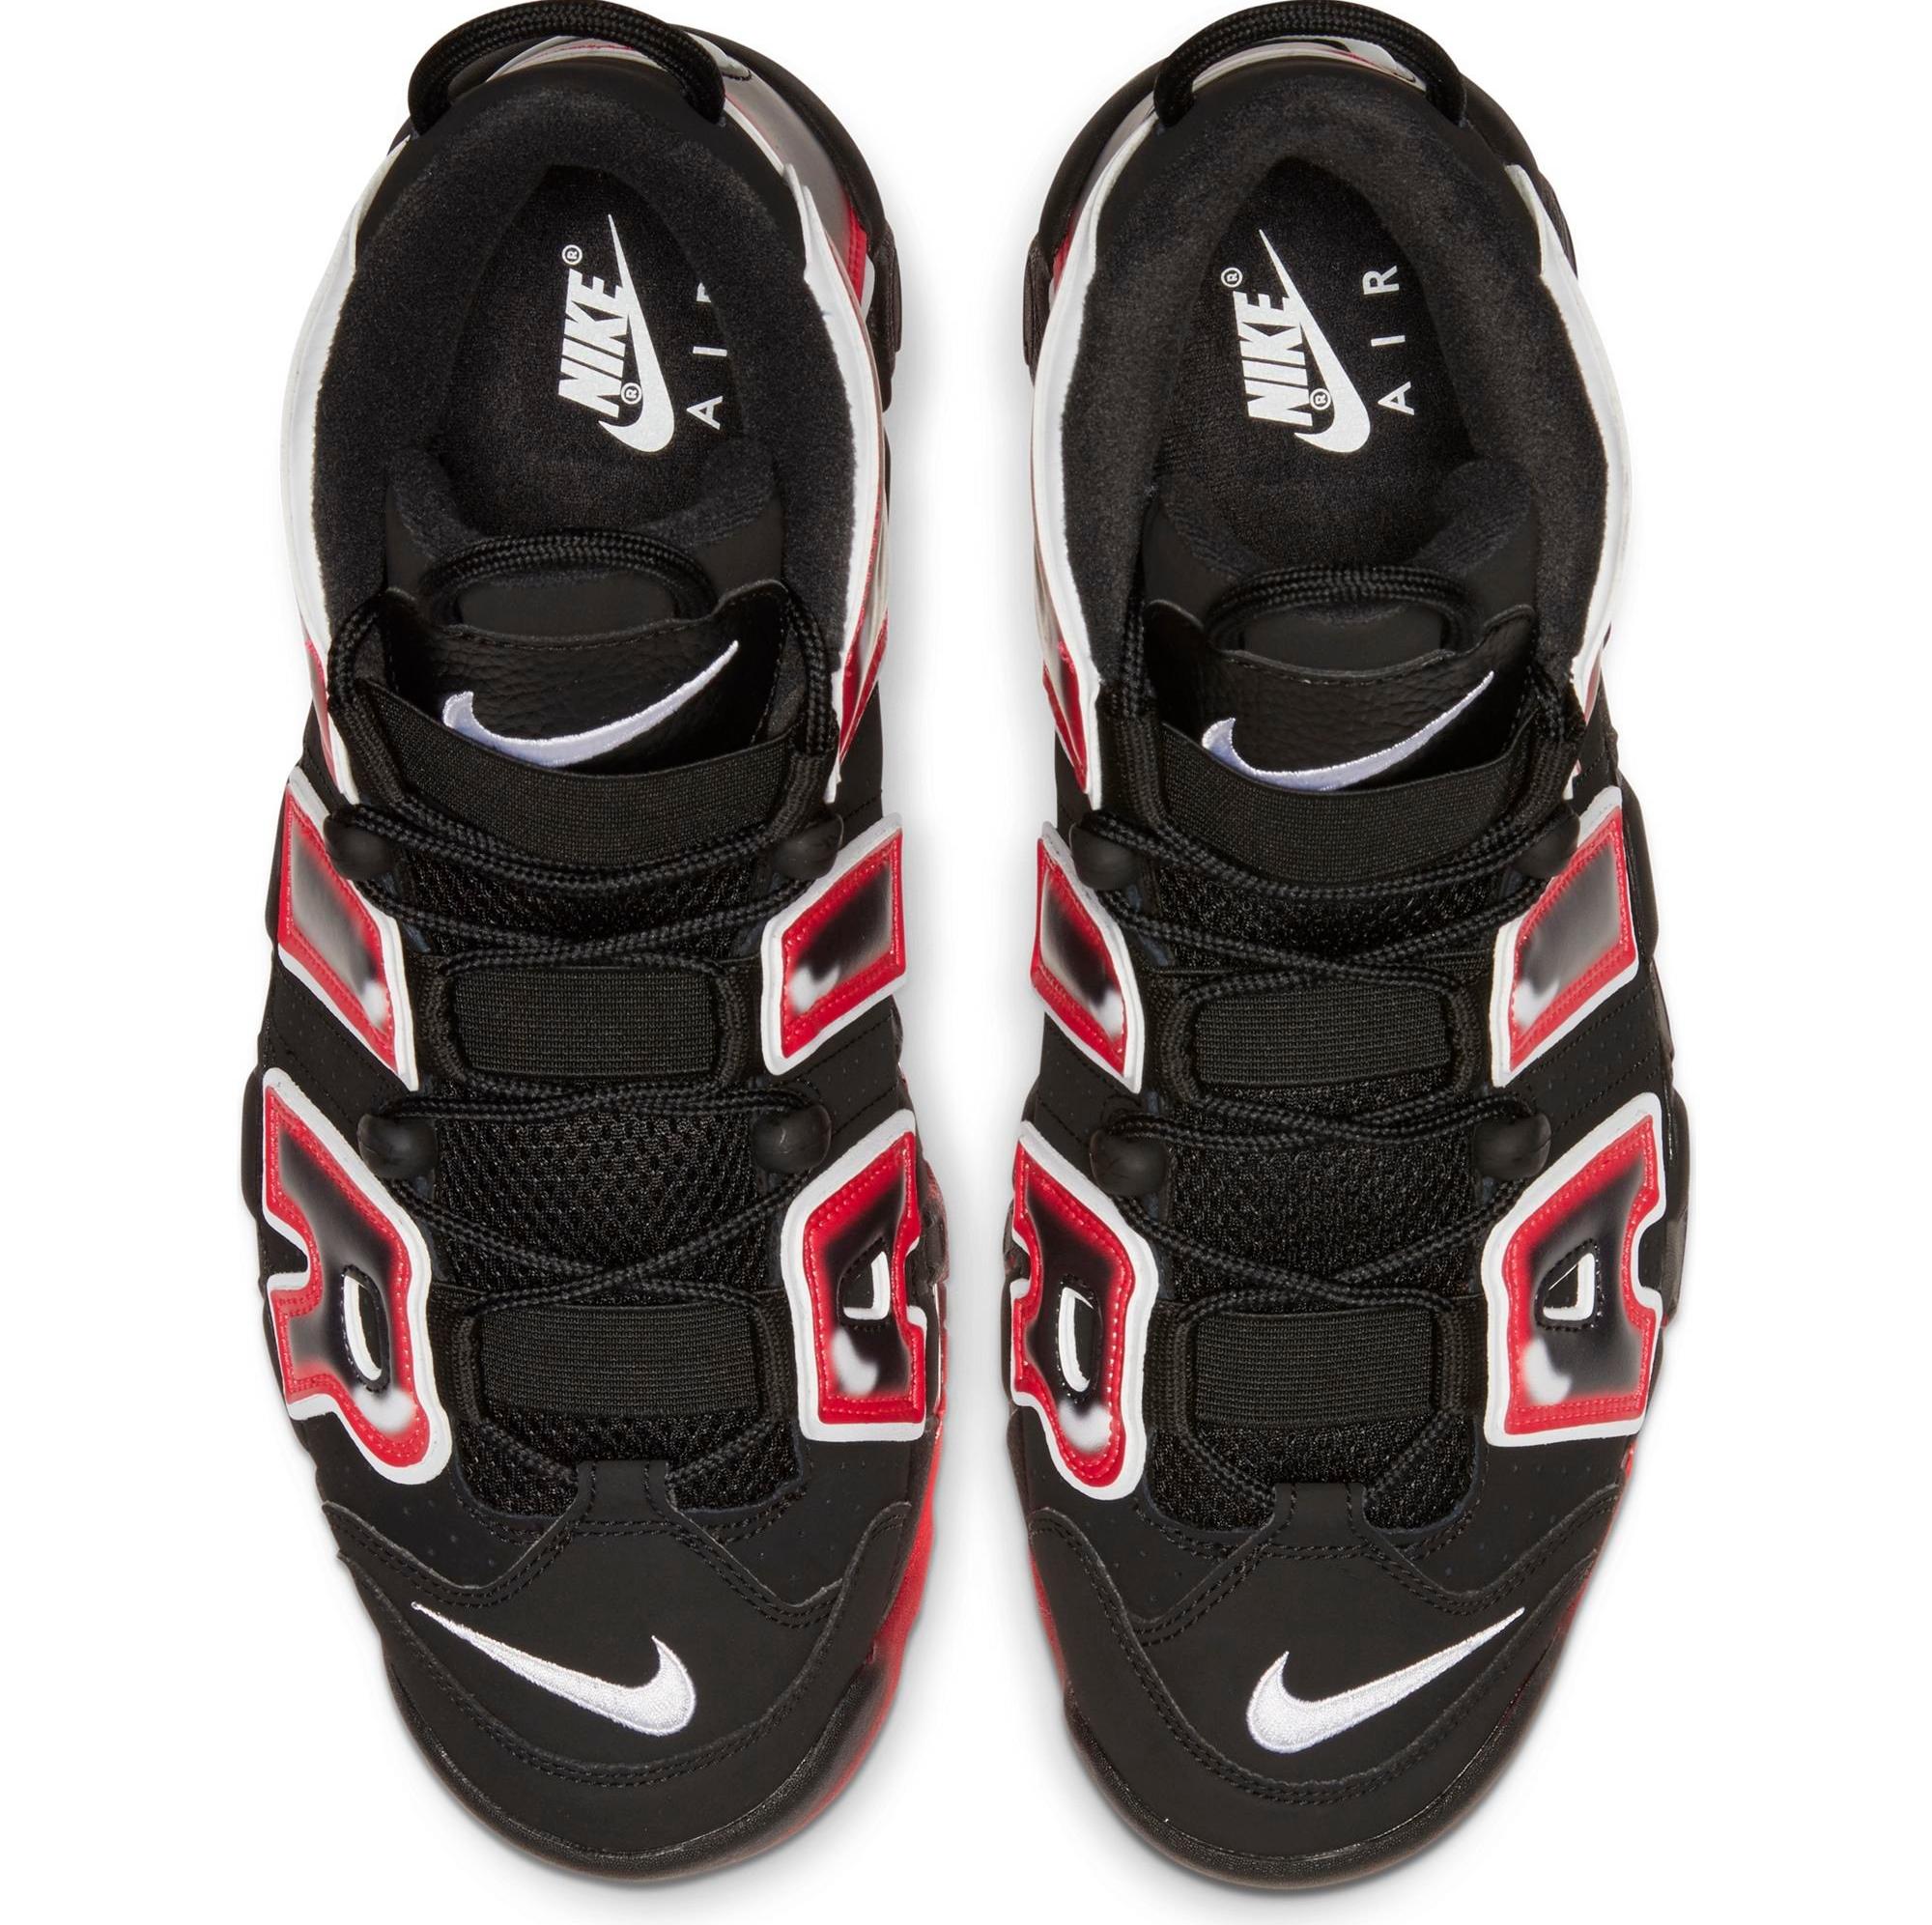 Sneakers Release: Nike Air More Uptempo 96 “Laser Crimson” Black 